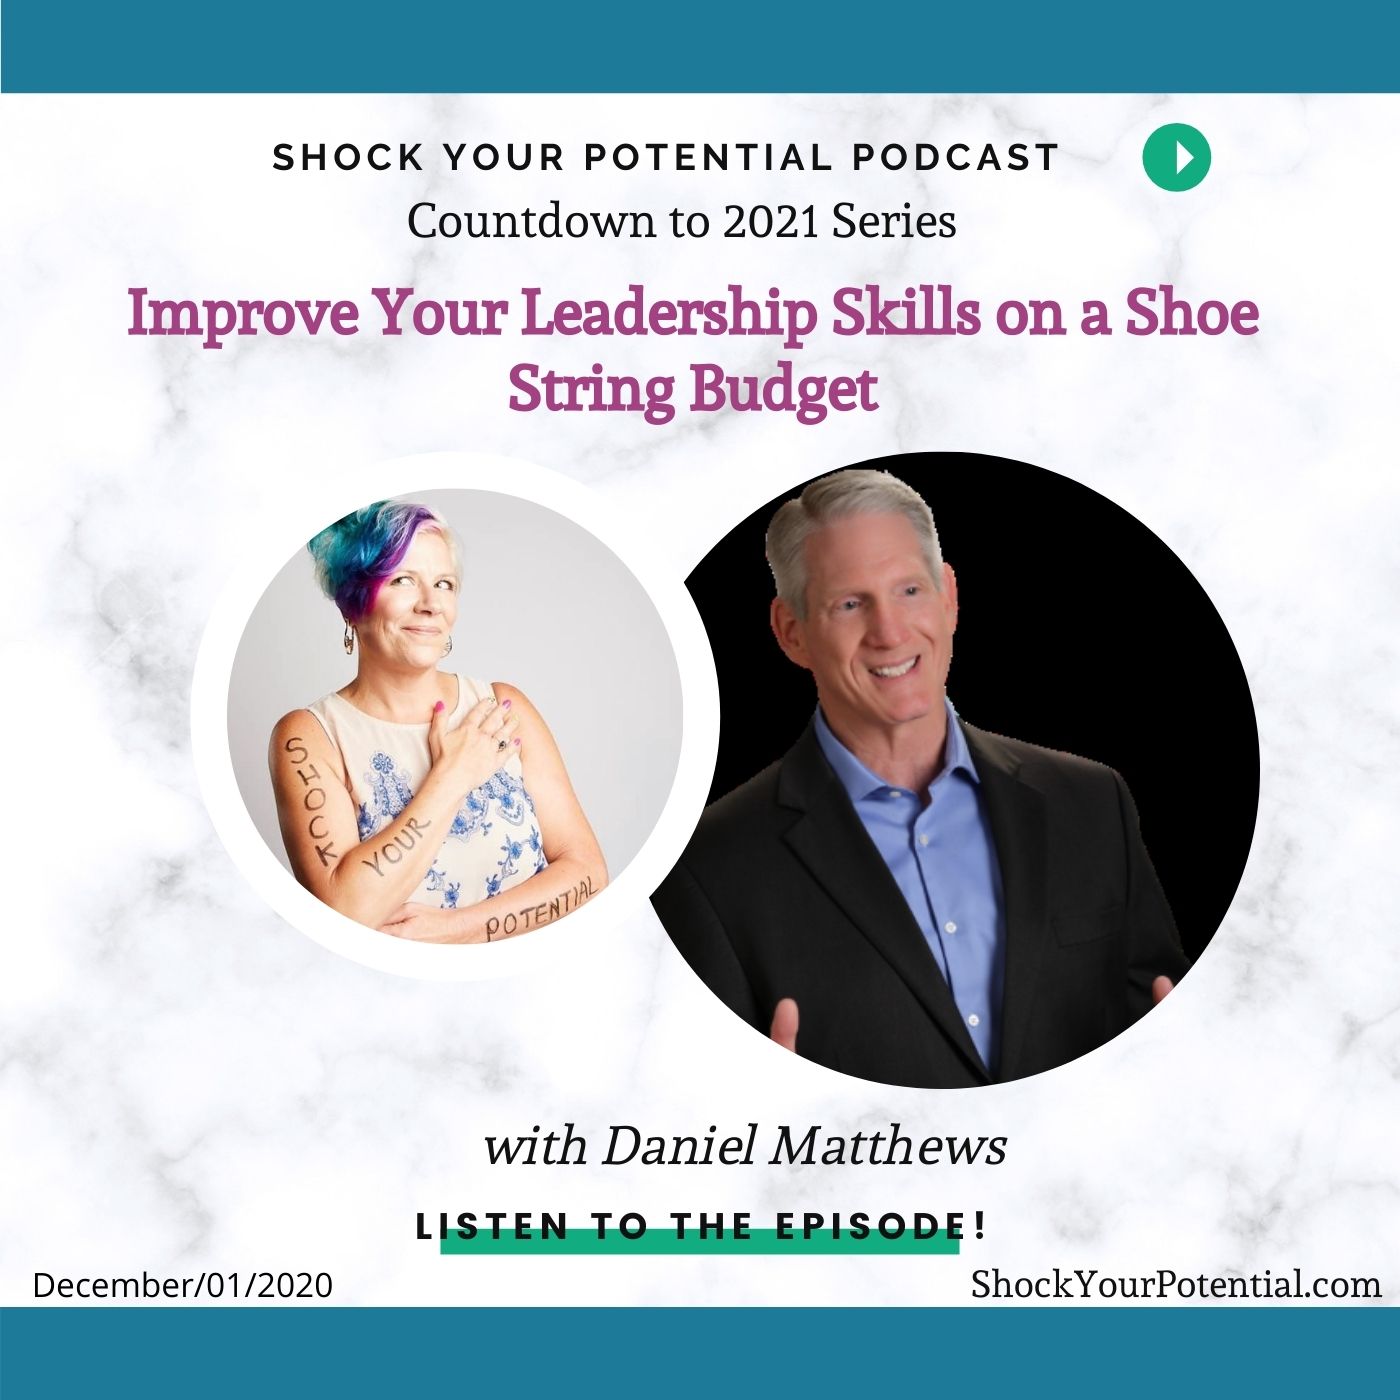 Improve Your Leadership Skills on a Shoe String Budget – Daniel Matthews